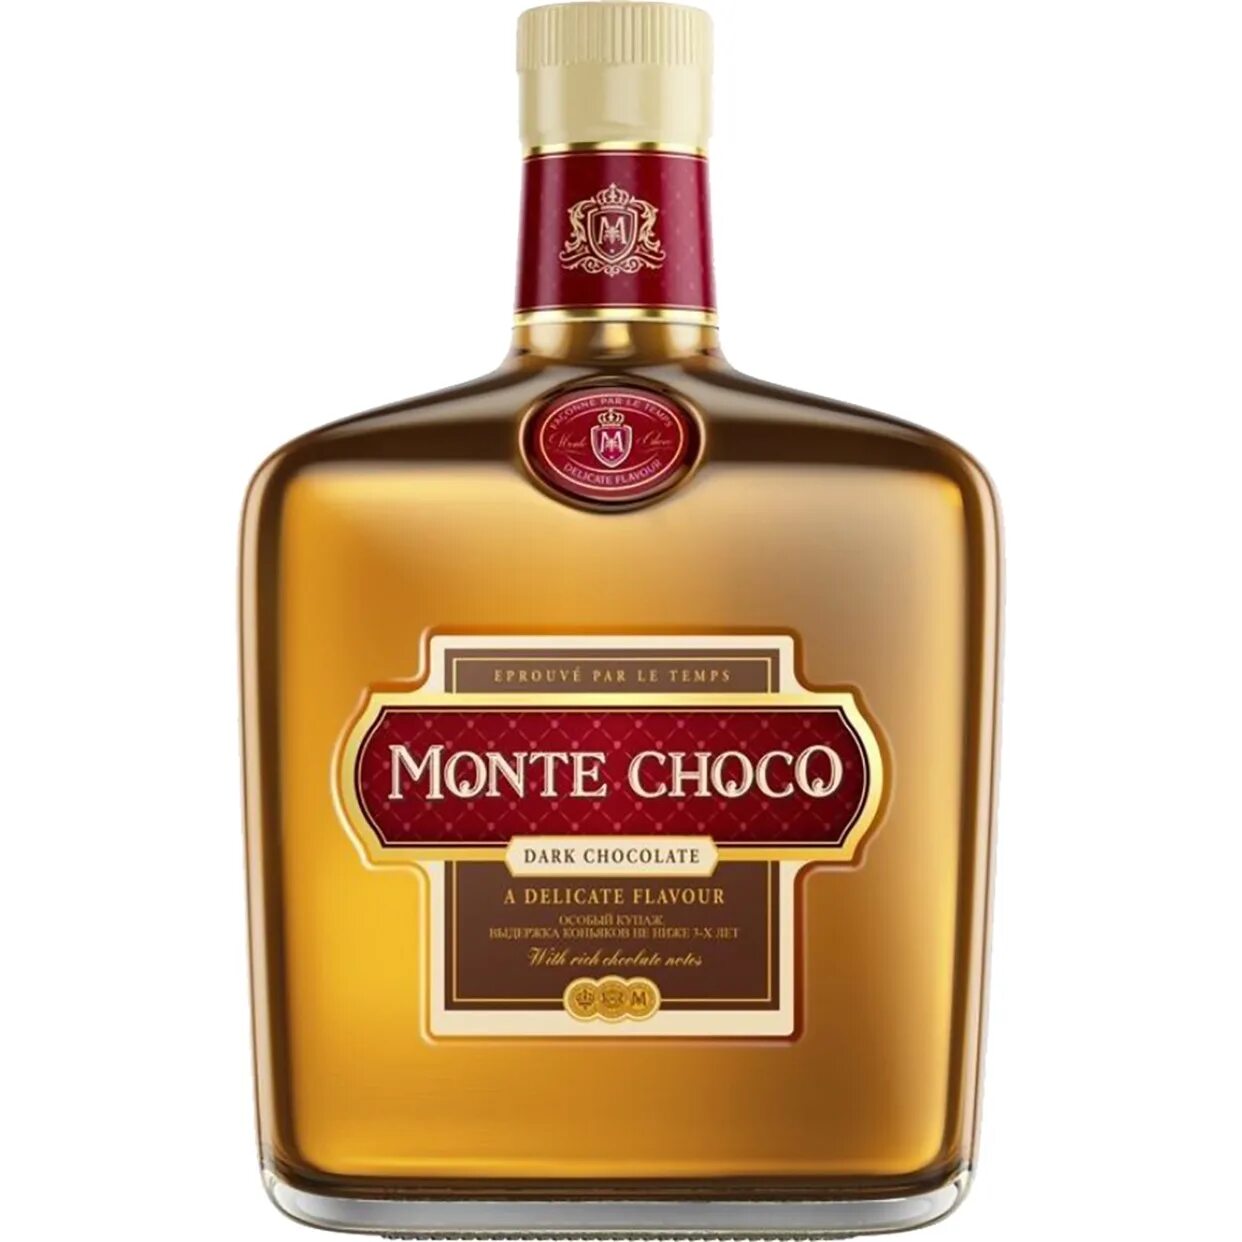 Коньяк монте шоко. Коктейль коньячный Монте шоко. Коньяк Monte Choco 0.5. Монте Чоко дарк шоколад. Monte Choco коньяк 0.5 VSOP.